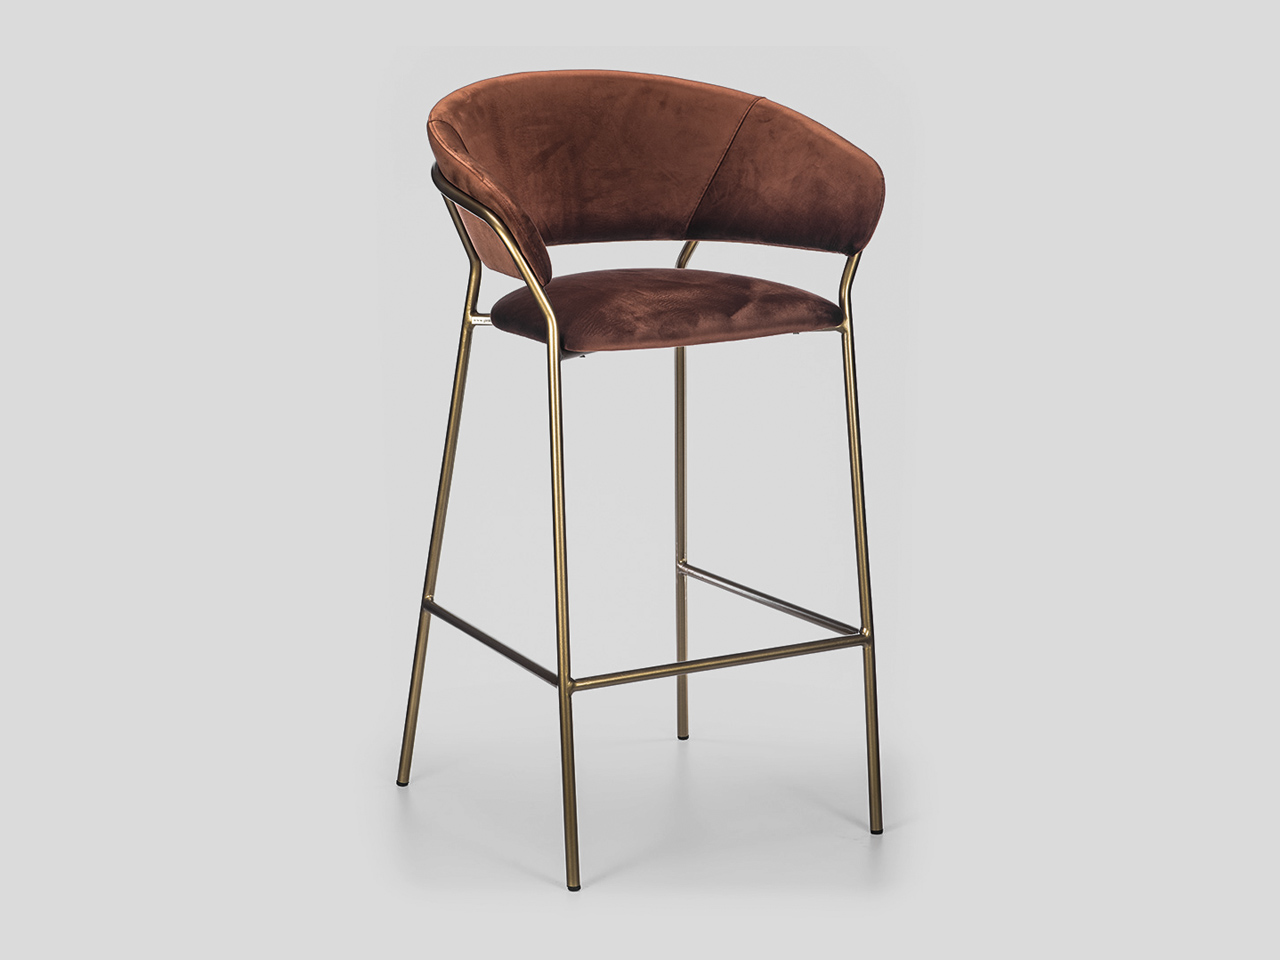 Luksuzna tapacirana barska stolica sa metalnim nogama Linea Milanovic